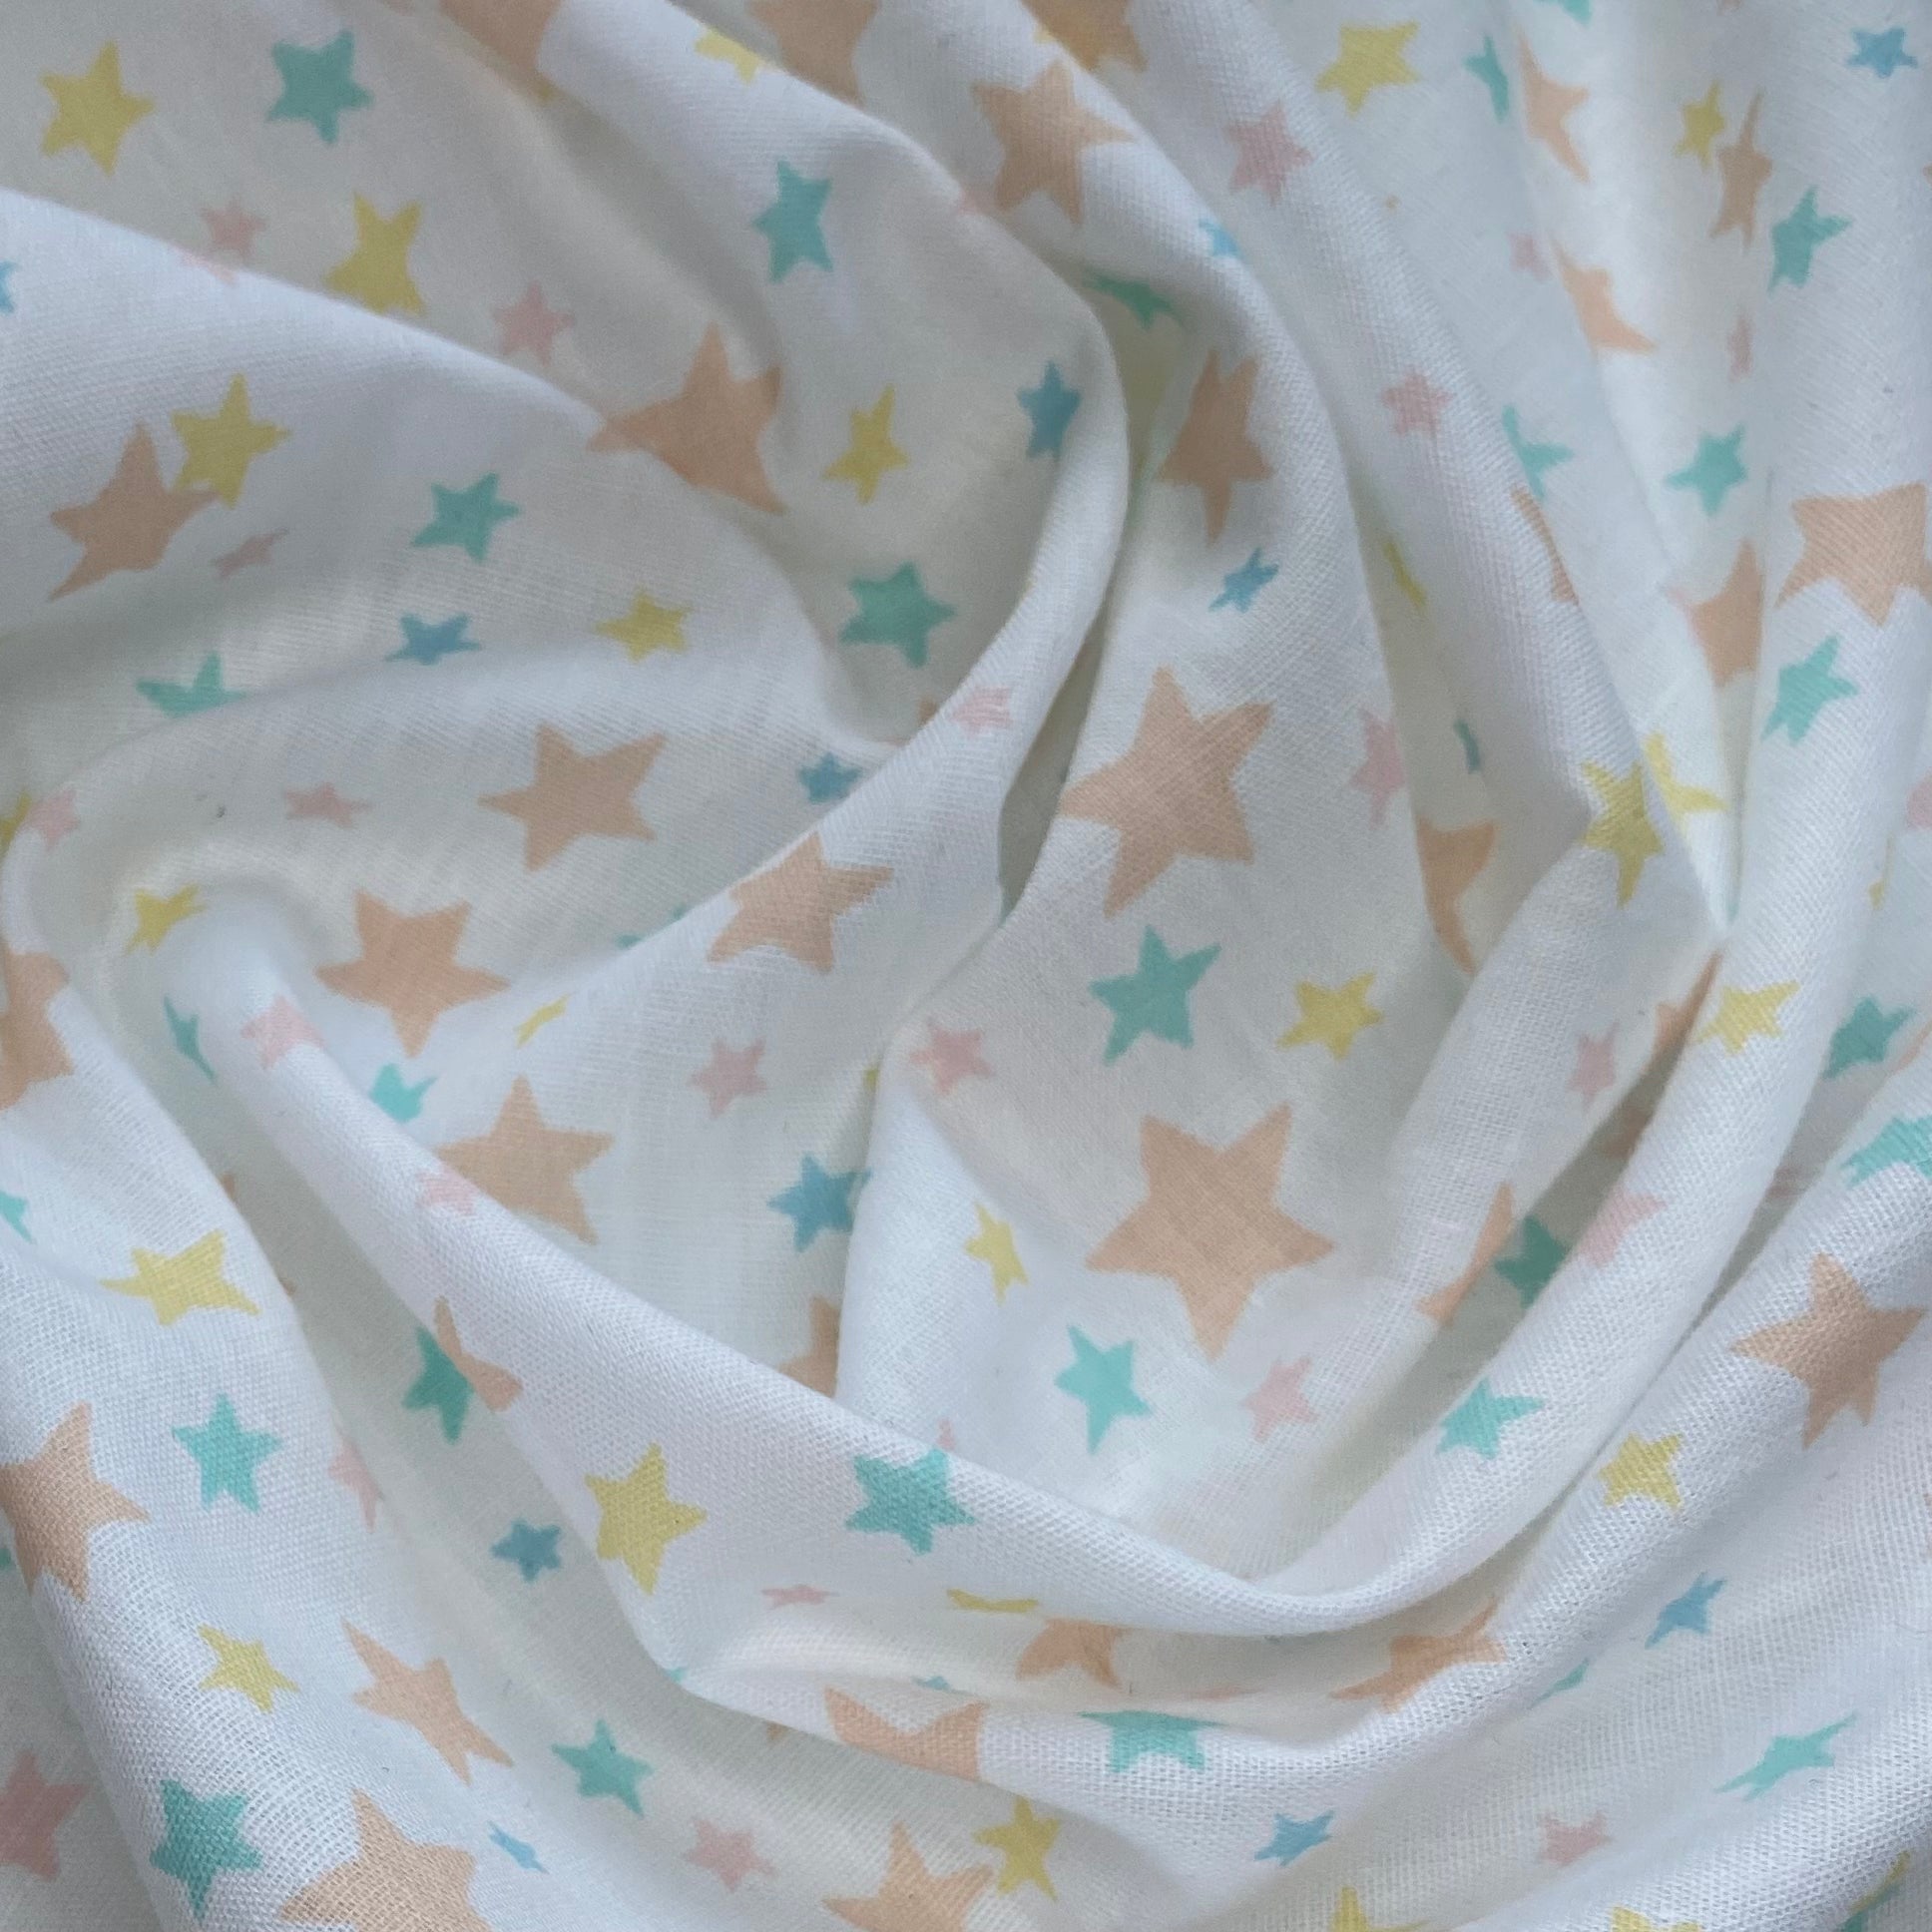 Printed Cotton - Stars - White/Peach/Green/Blue/Yellow